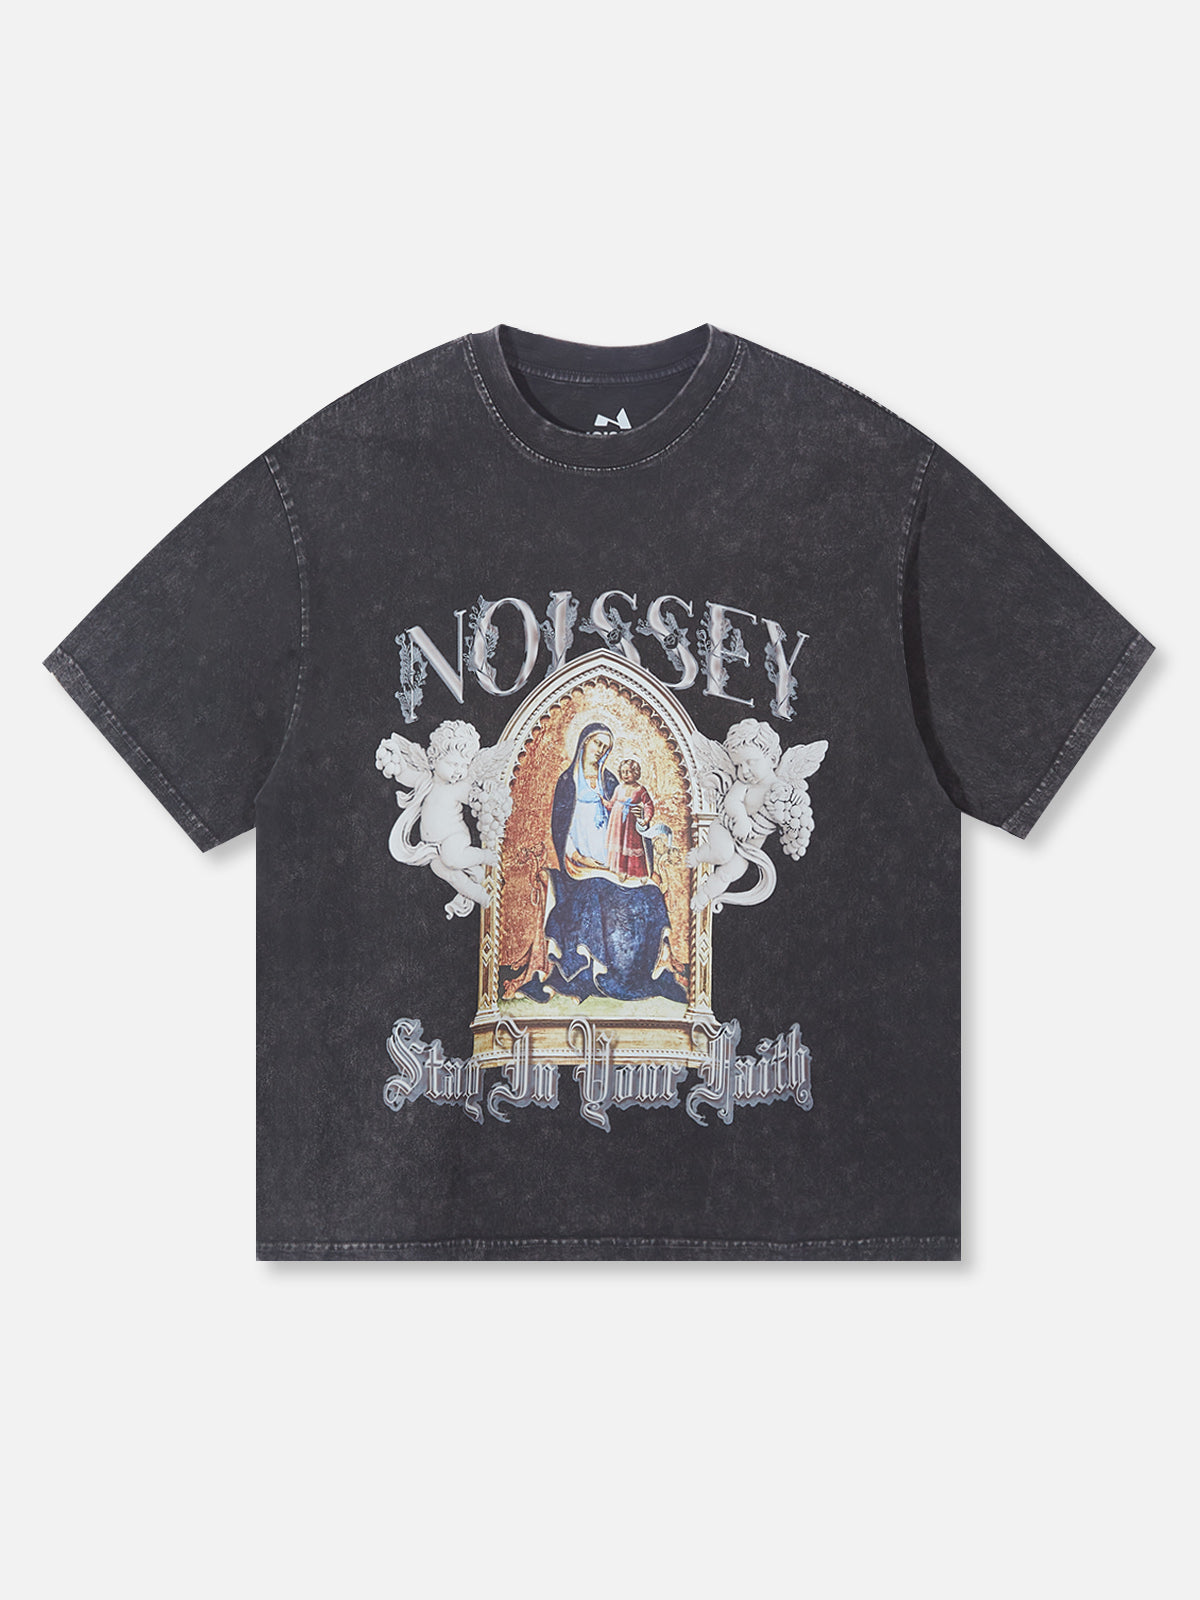 Madonna and Child T-shirt